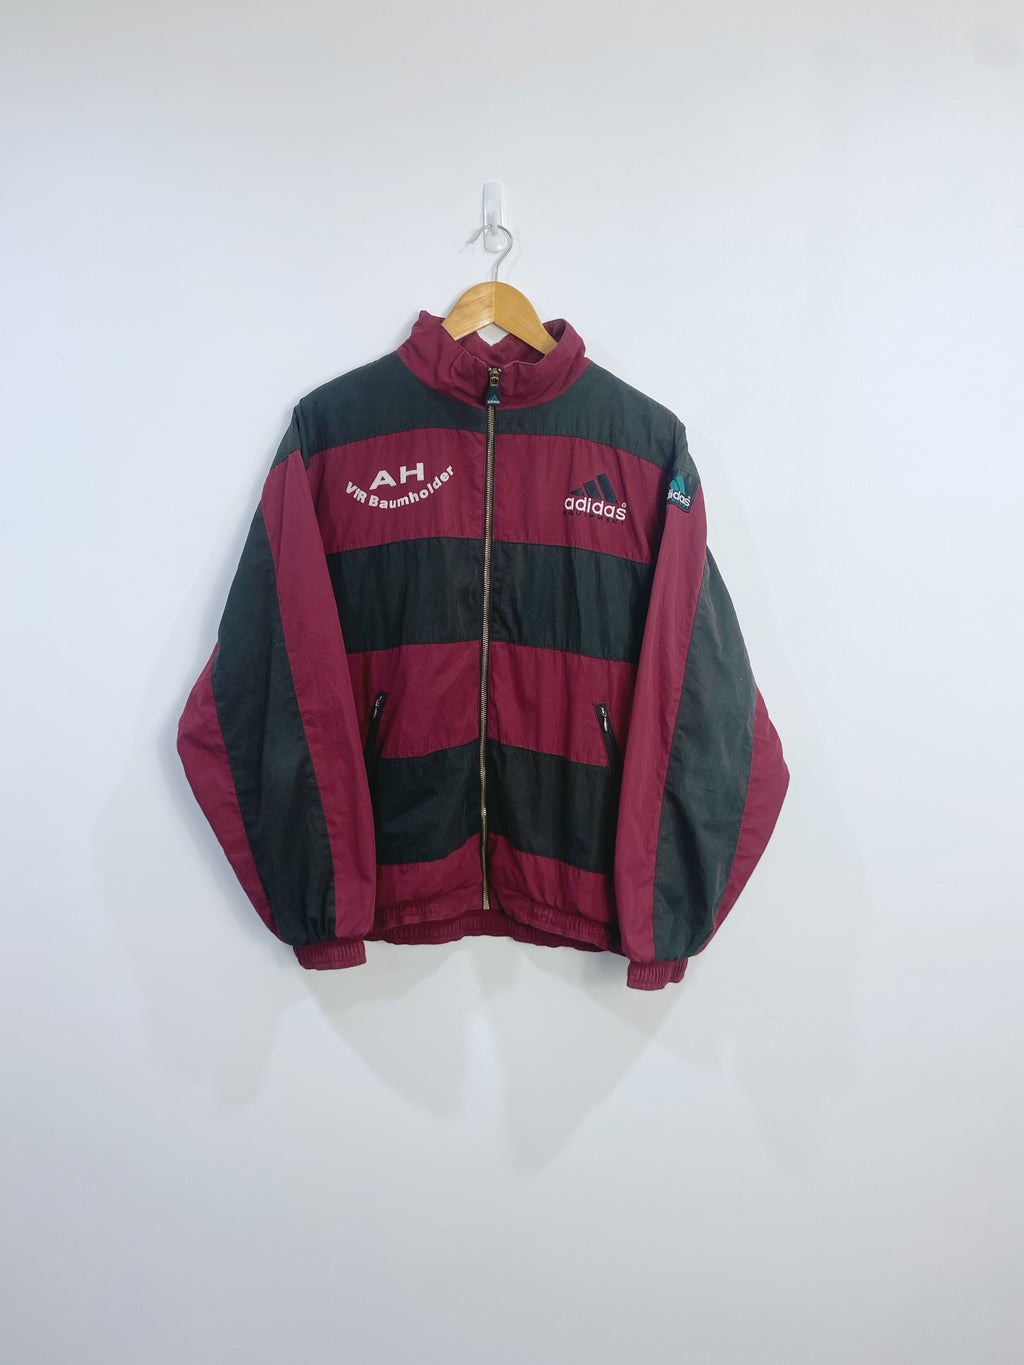 Vintage 90s Adidas Equipment Embroidered Jacket M